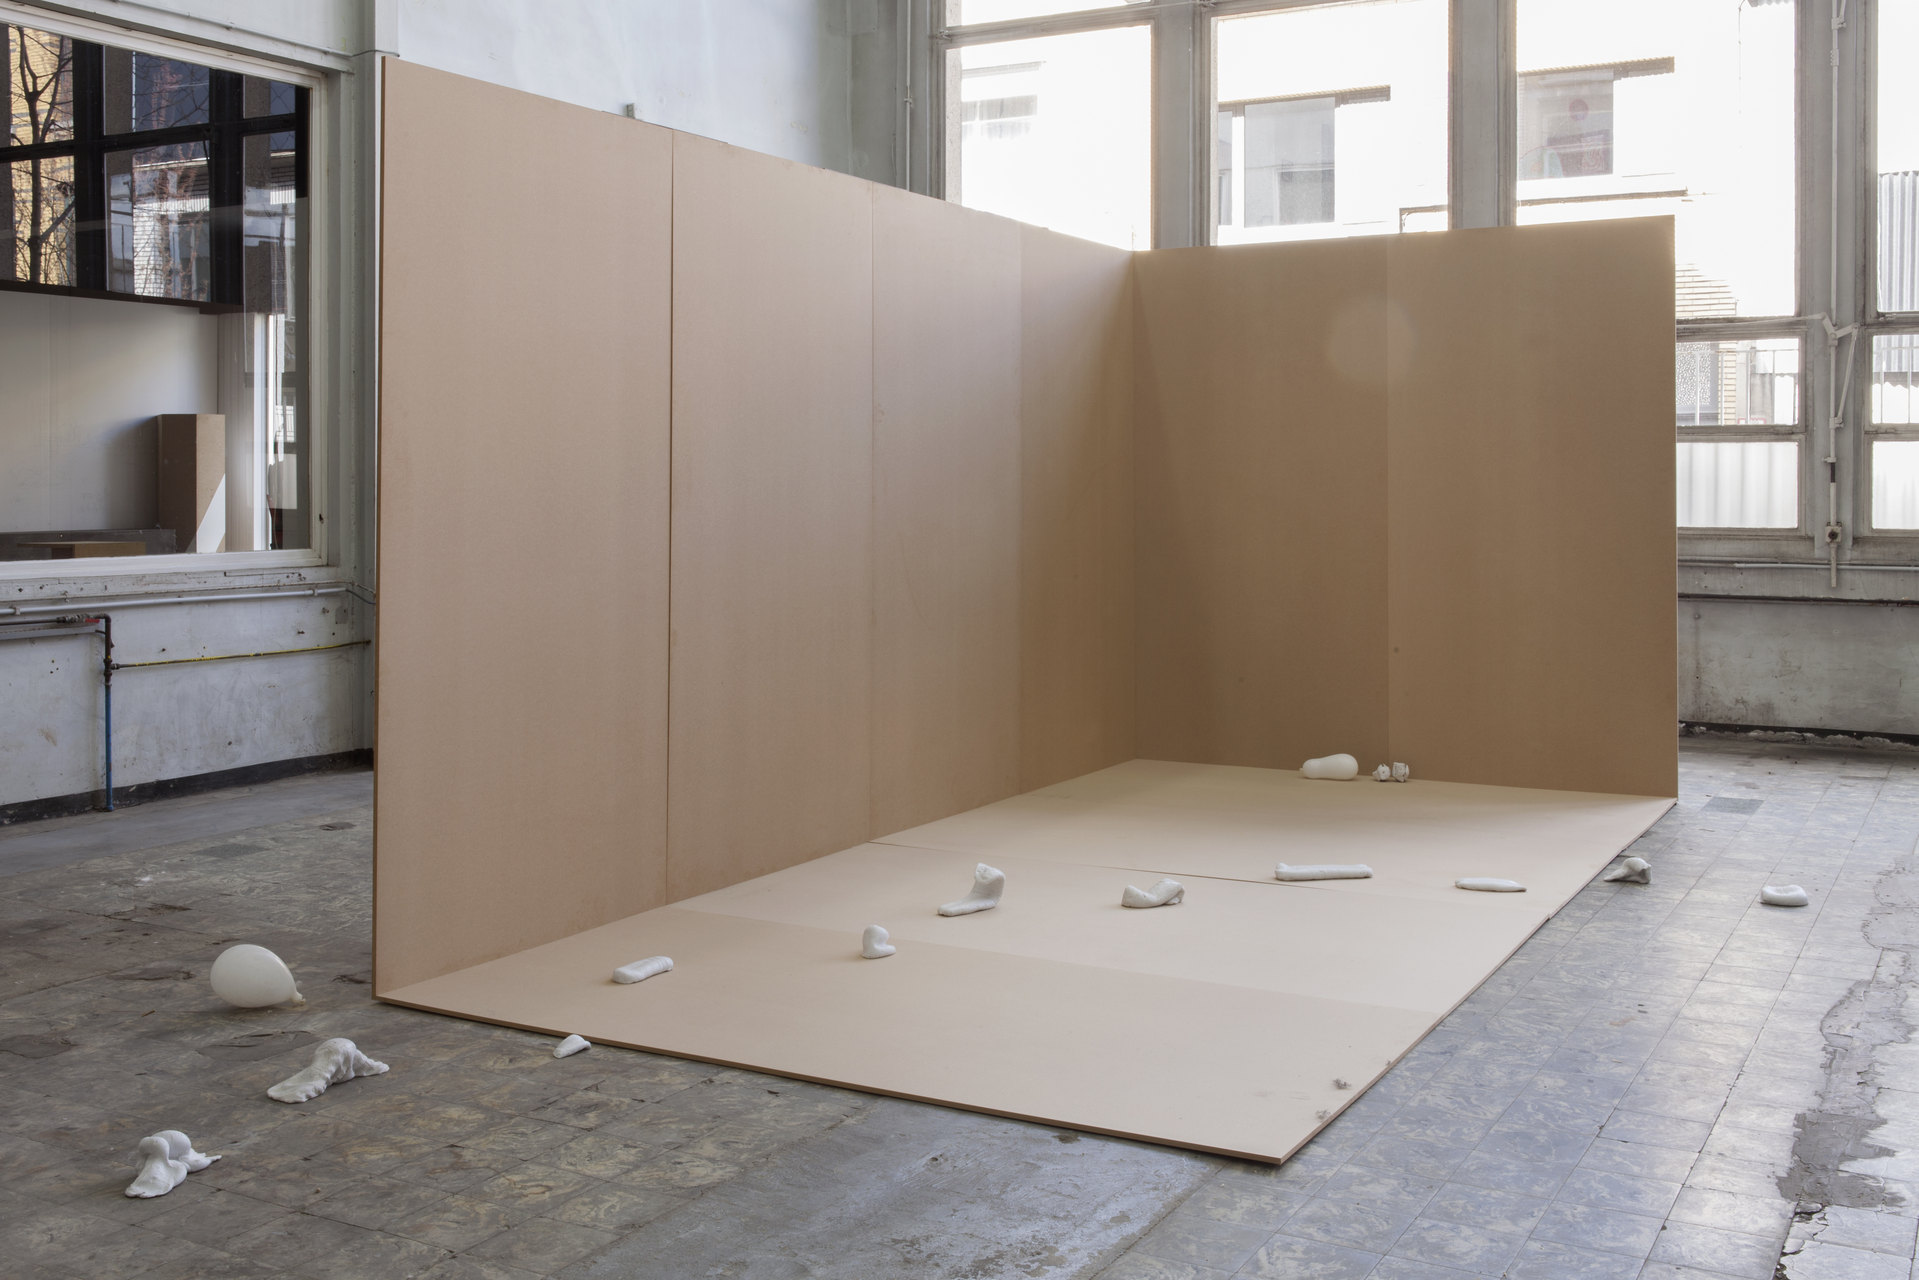 'Michael Dean. Jumping Bones’, installation view, Extra City Kunsthal, 2015 © We Document Art_14